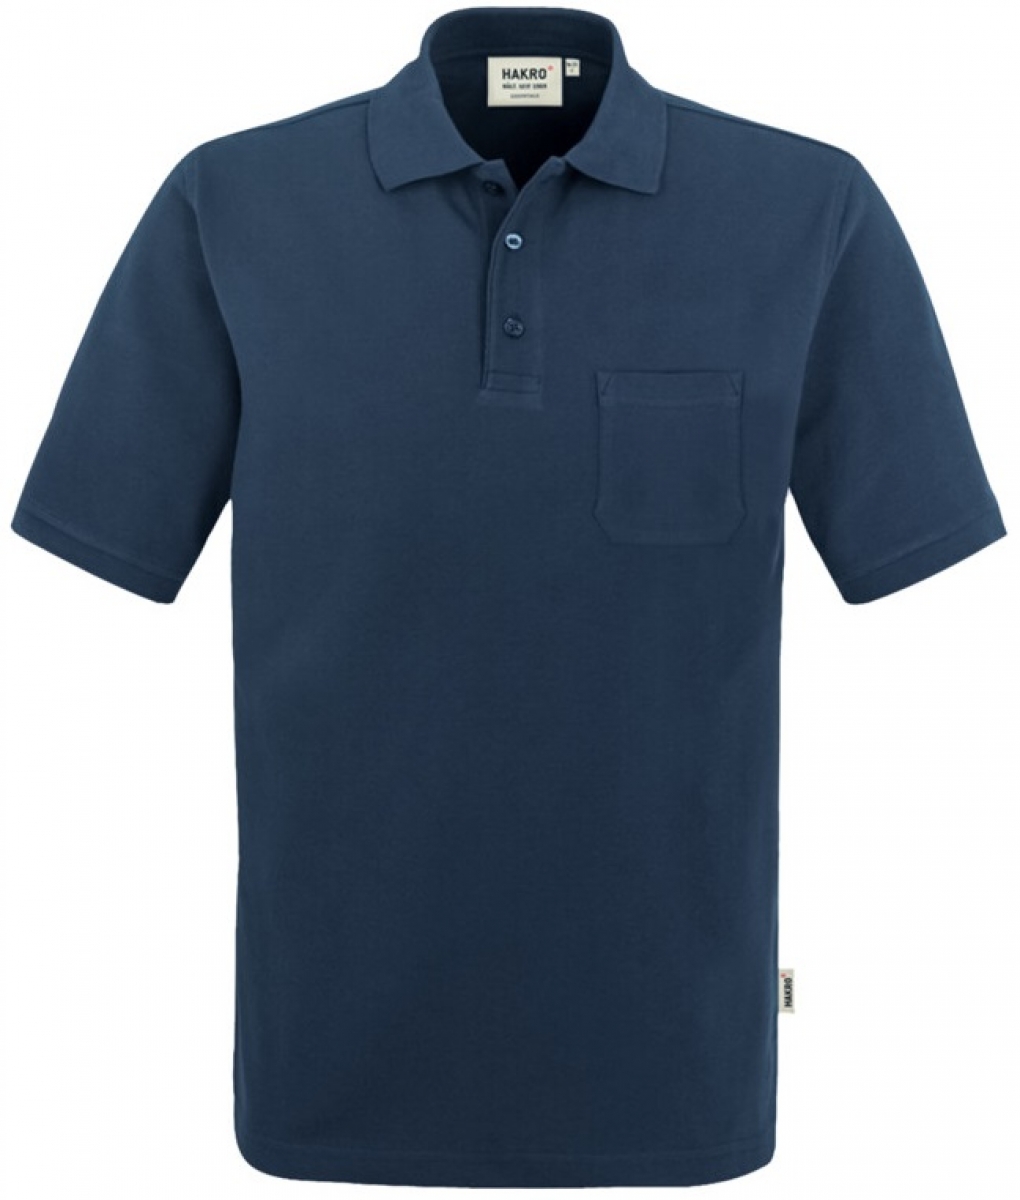 HAKRO-Worker-Shirts, Pocket-Poloshirt Top, marine